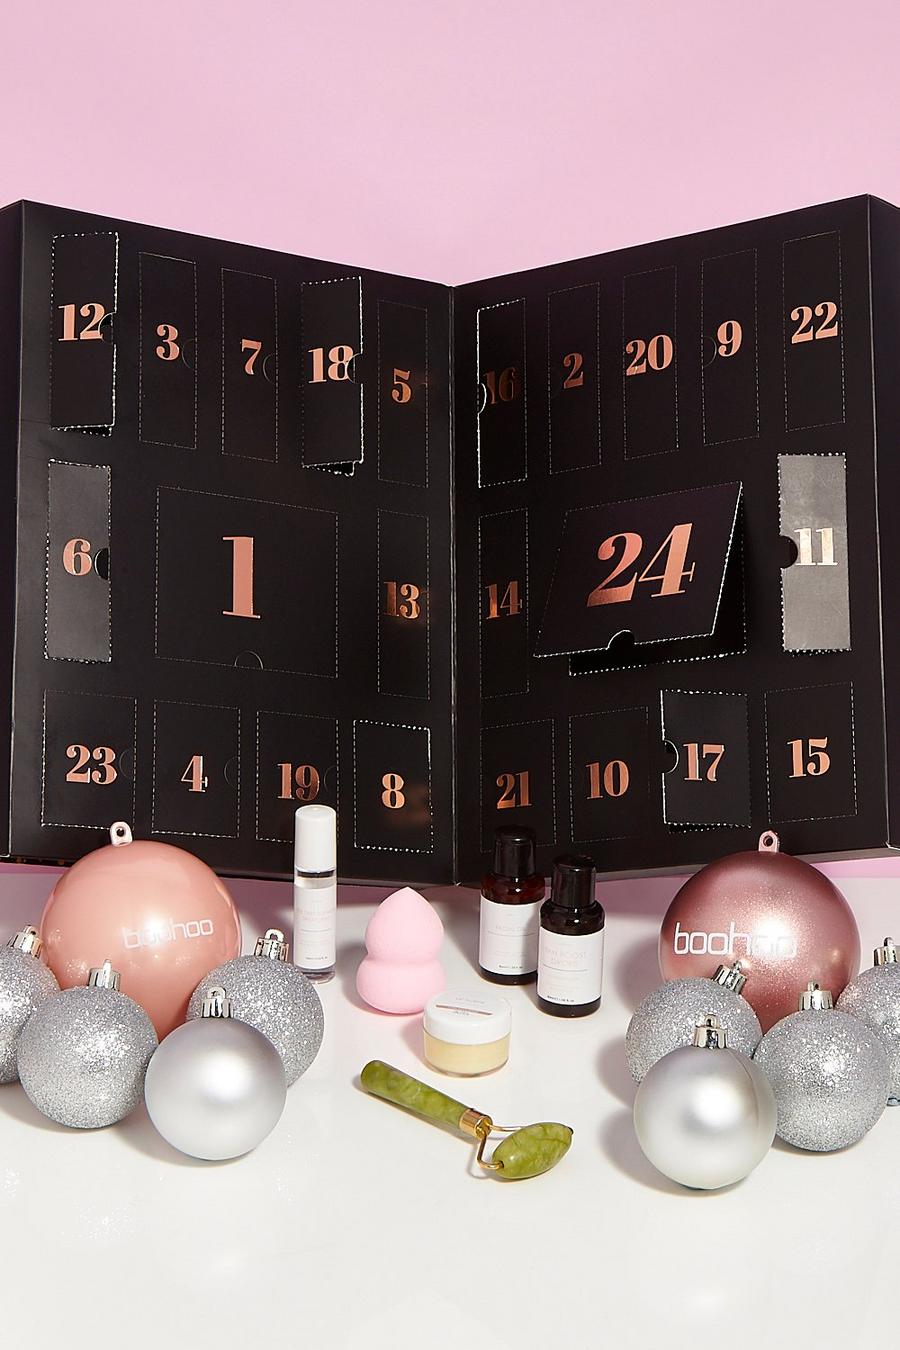 Boohoo Beauty Advent Calendar